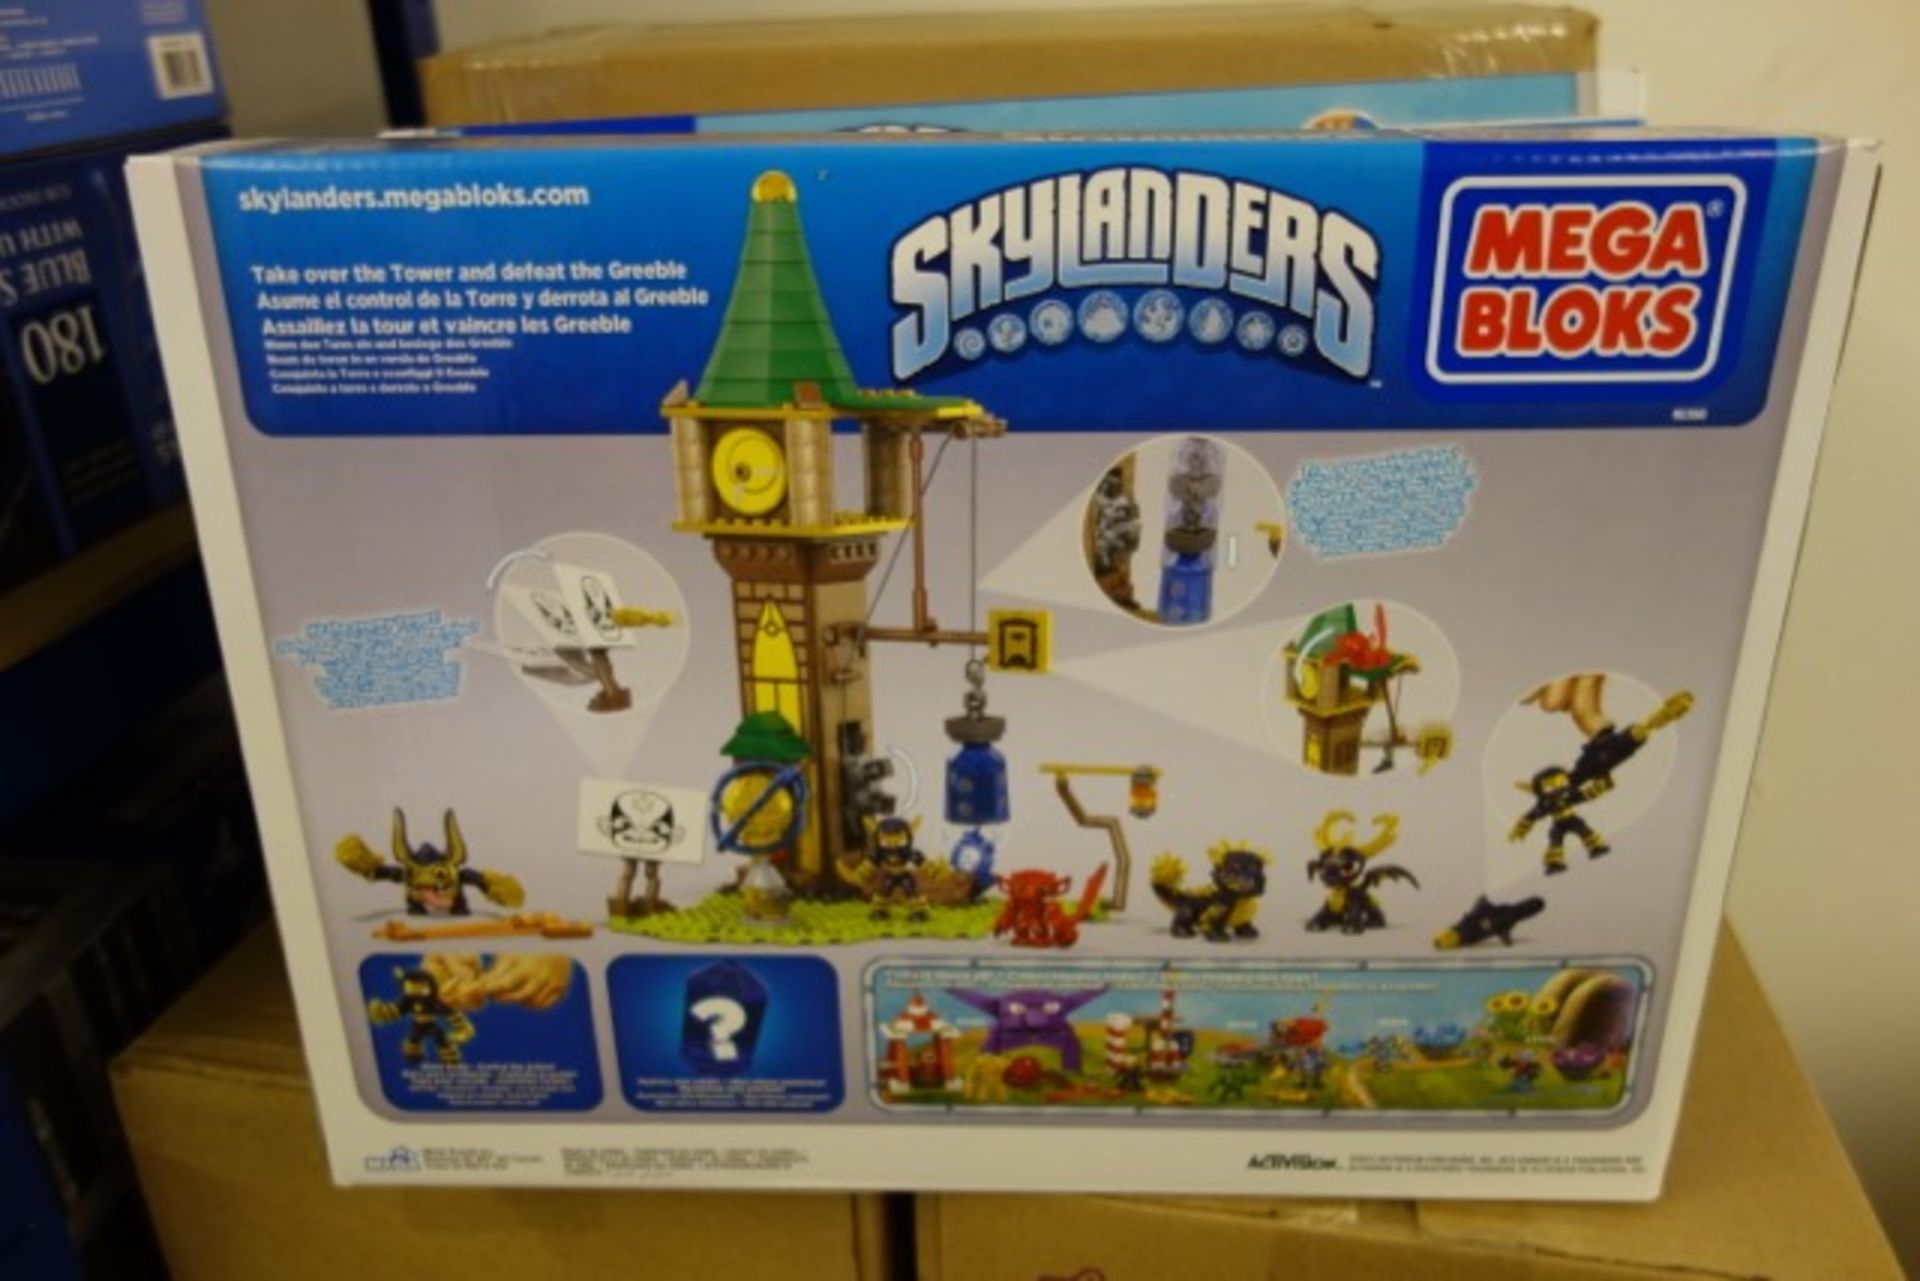 10 x Brand New Mega Bloks Skylanders Tower of Time 296 Piece Play Set. Original RRP £49.99 each, - Image 2 of 2